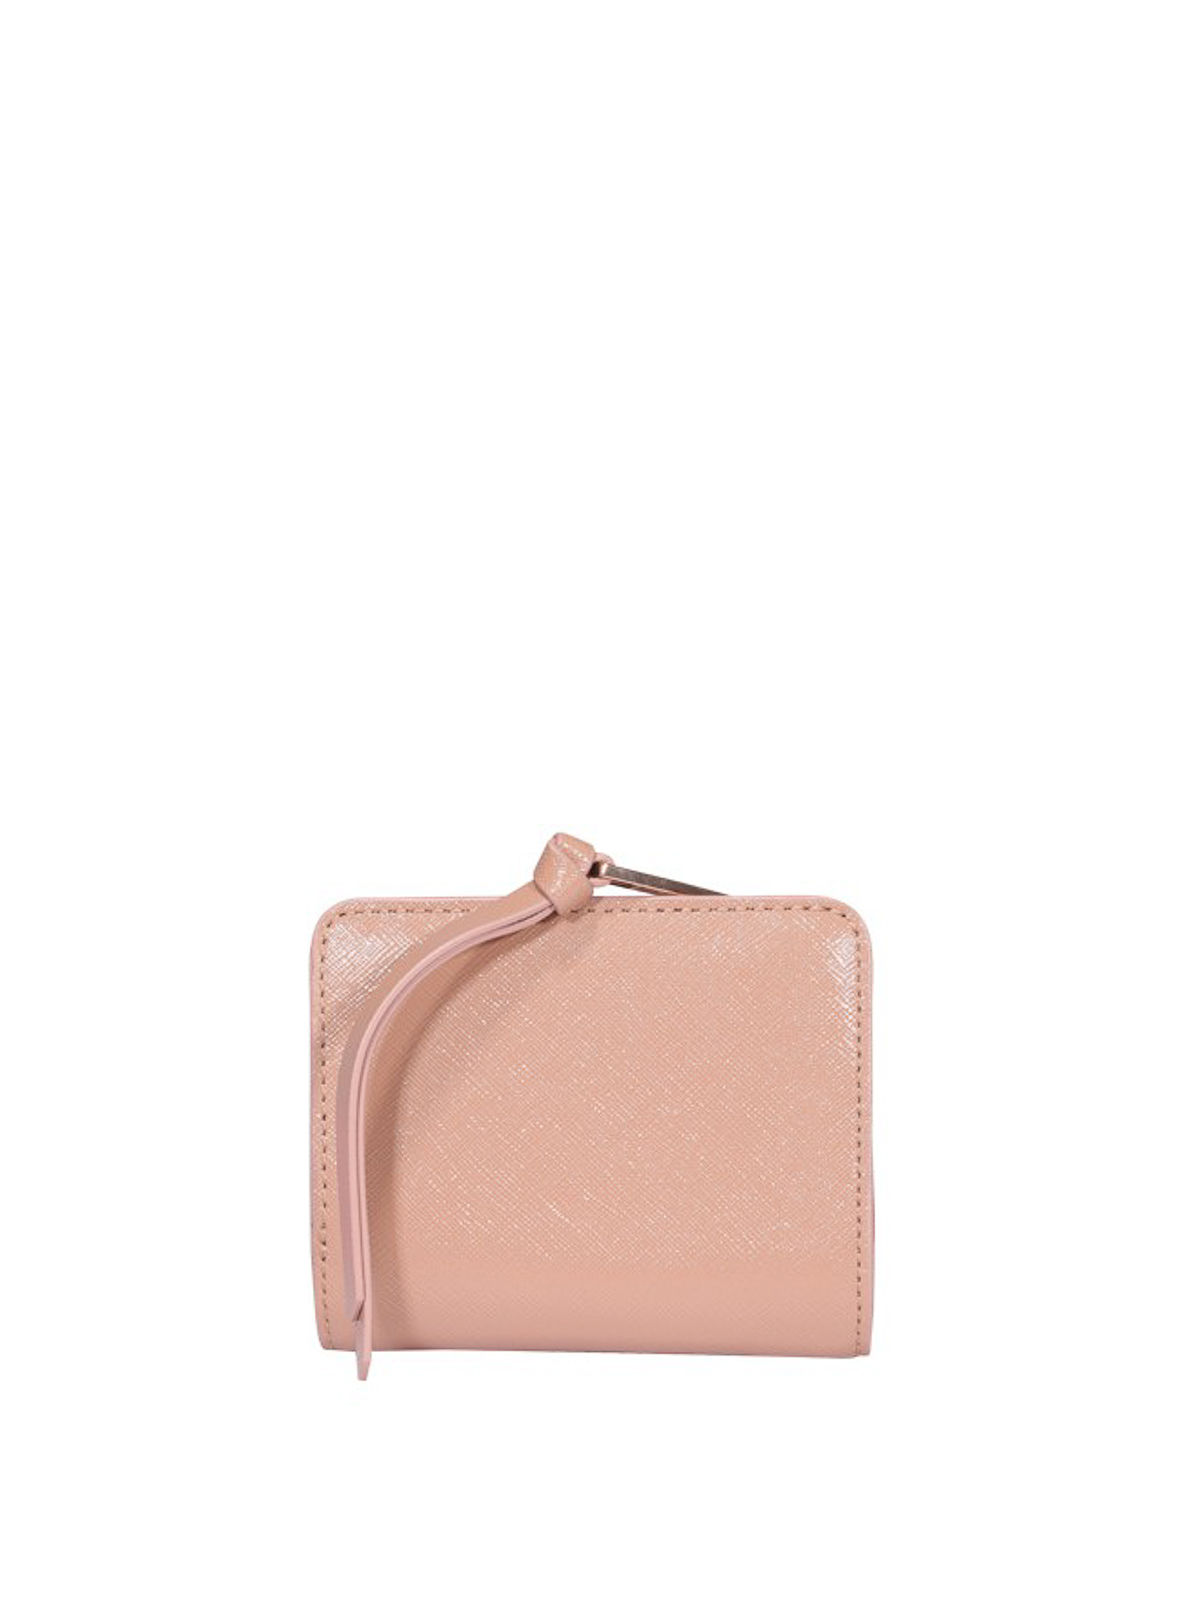 Marc Jacobs Women's The Snapshot DTM Mini Compact Wallet, Black, One Size